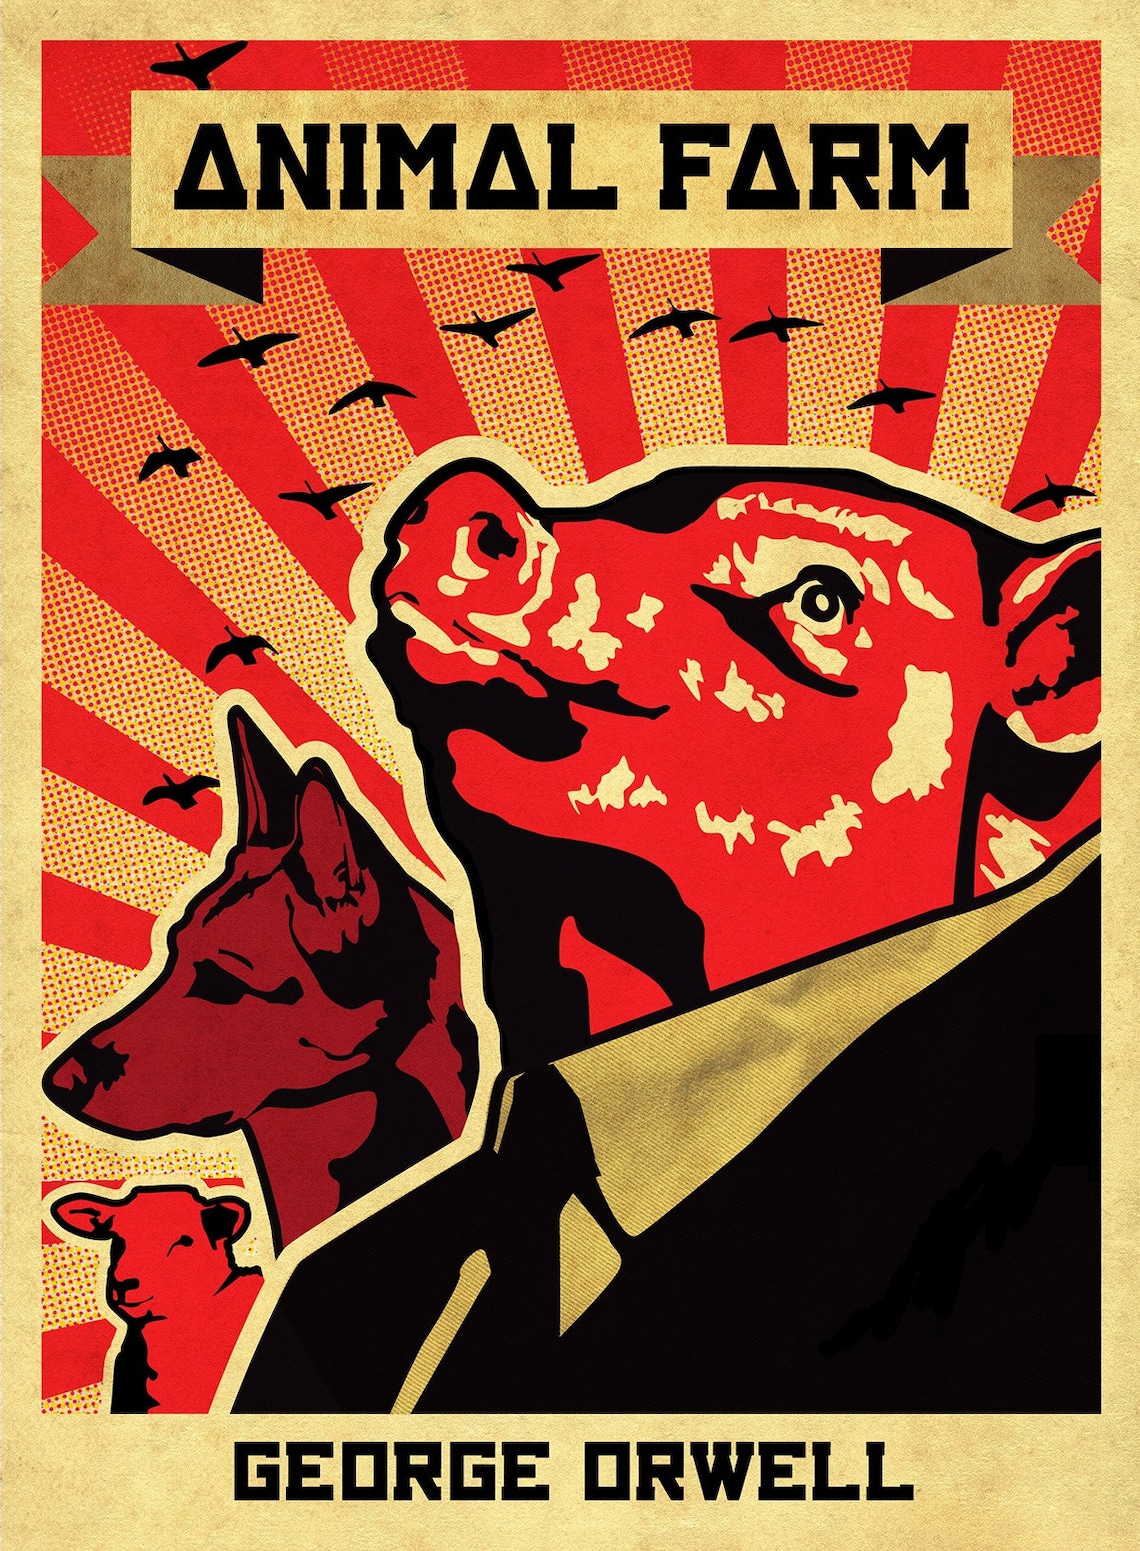 propaganda assignment animal farm